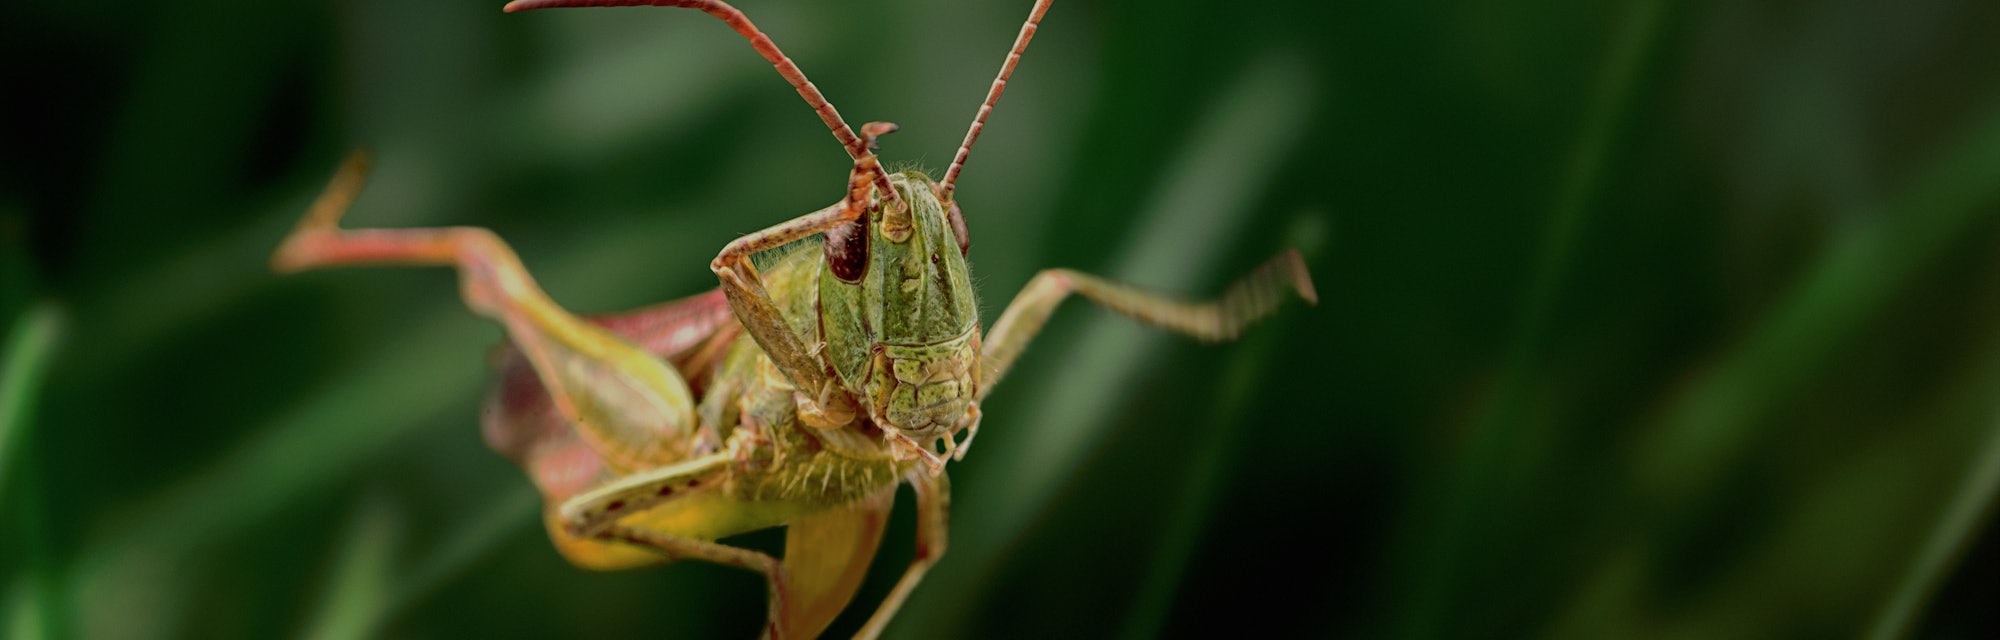 Grasshopper jump close up, insect macro 